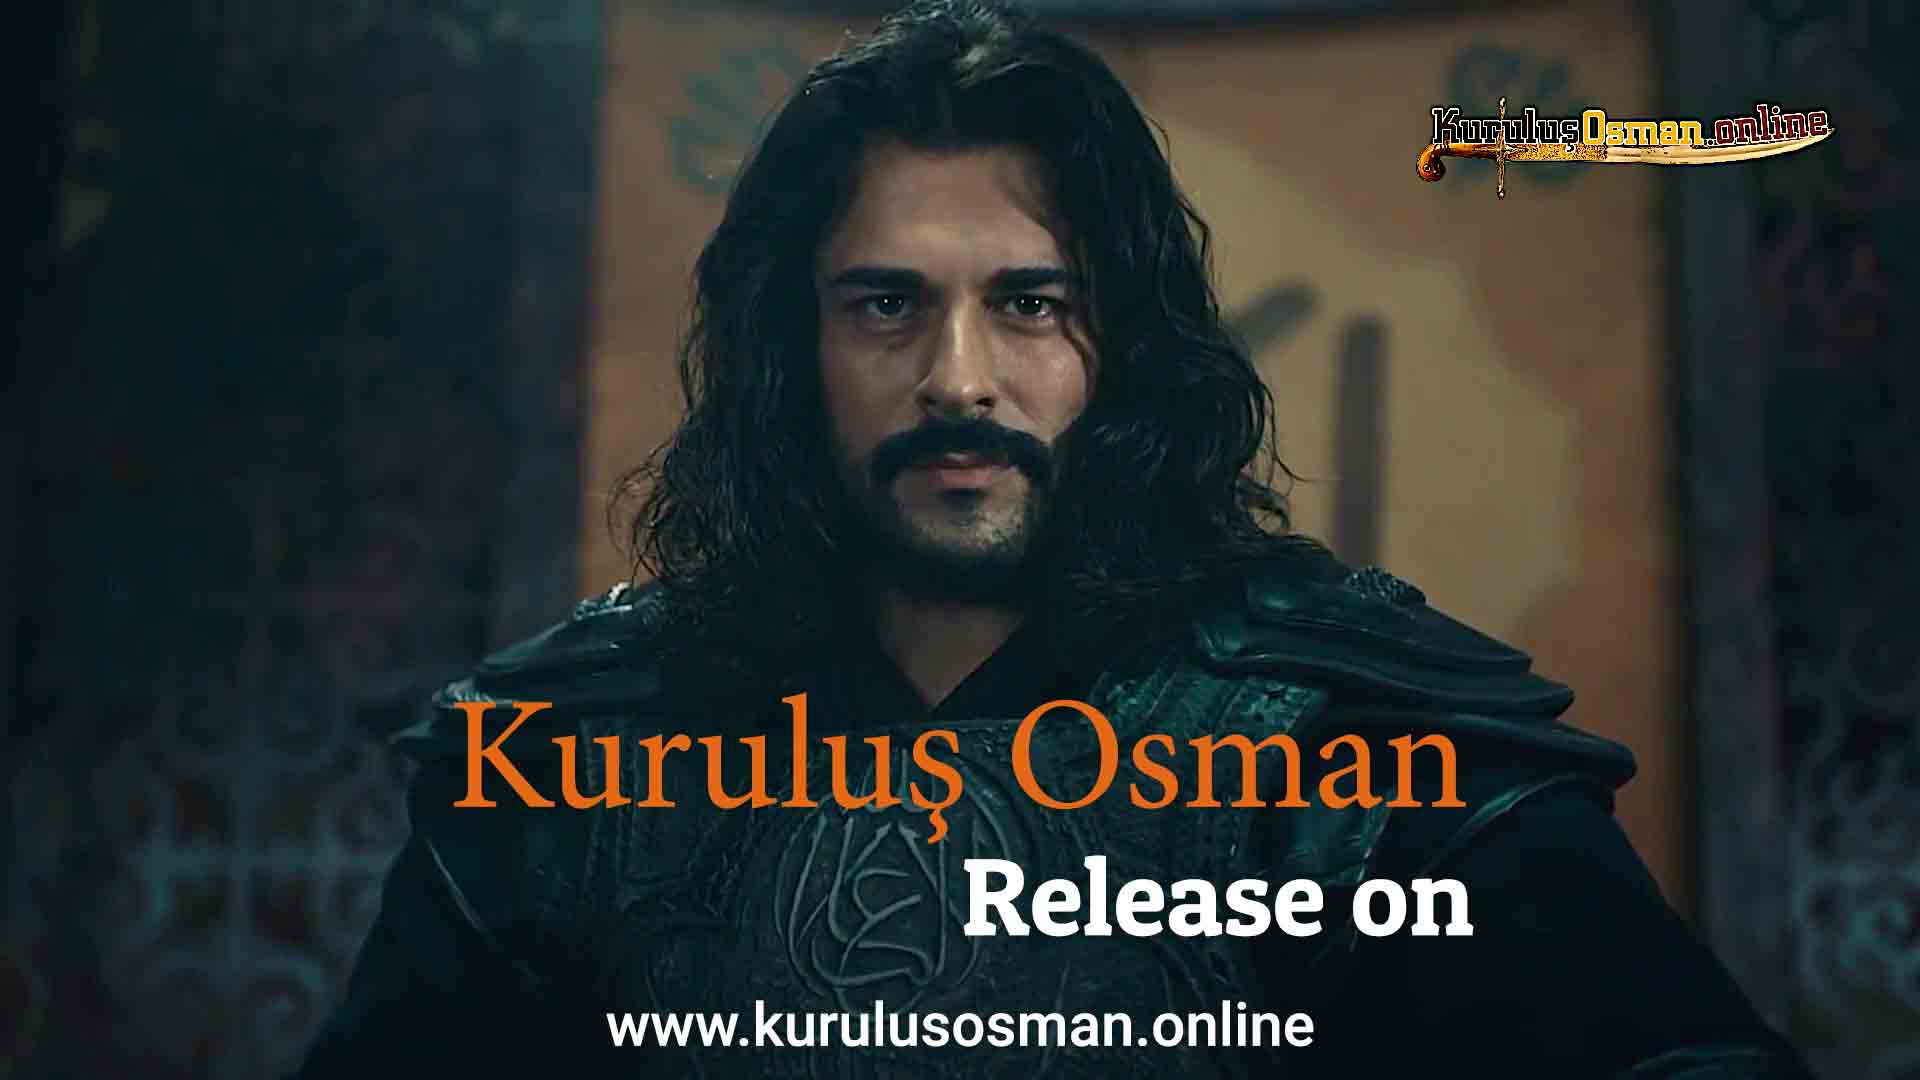 When will Kuruluş Osman be published